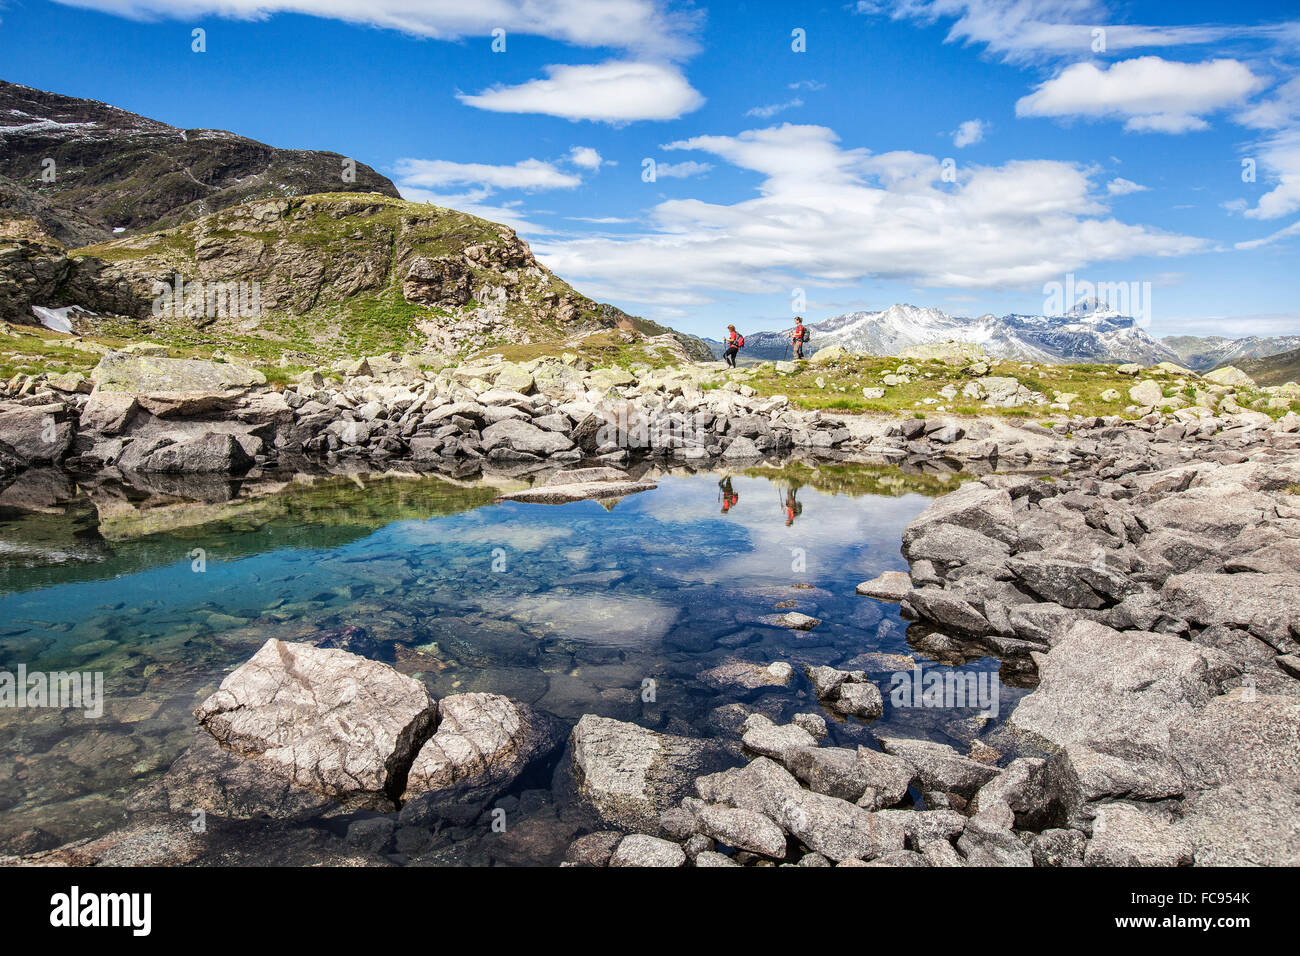 Hikers admire the view at Lake Grevasalvas, Engadine, Canton of Grisons (Graubunden), Switzerland, Europe Stock Photo